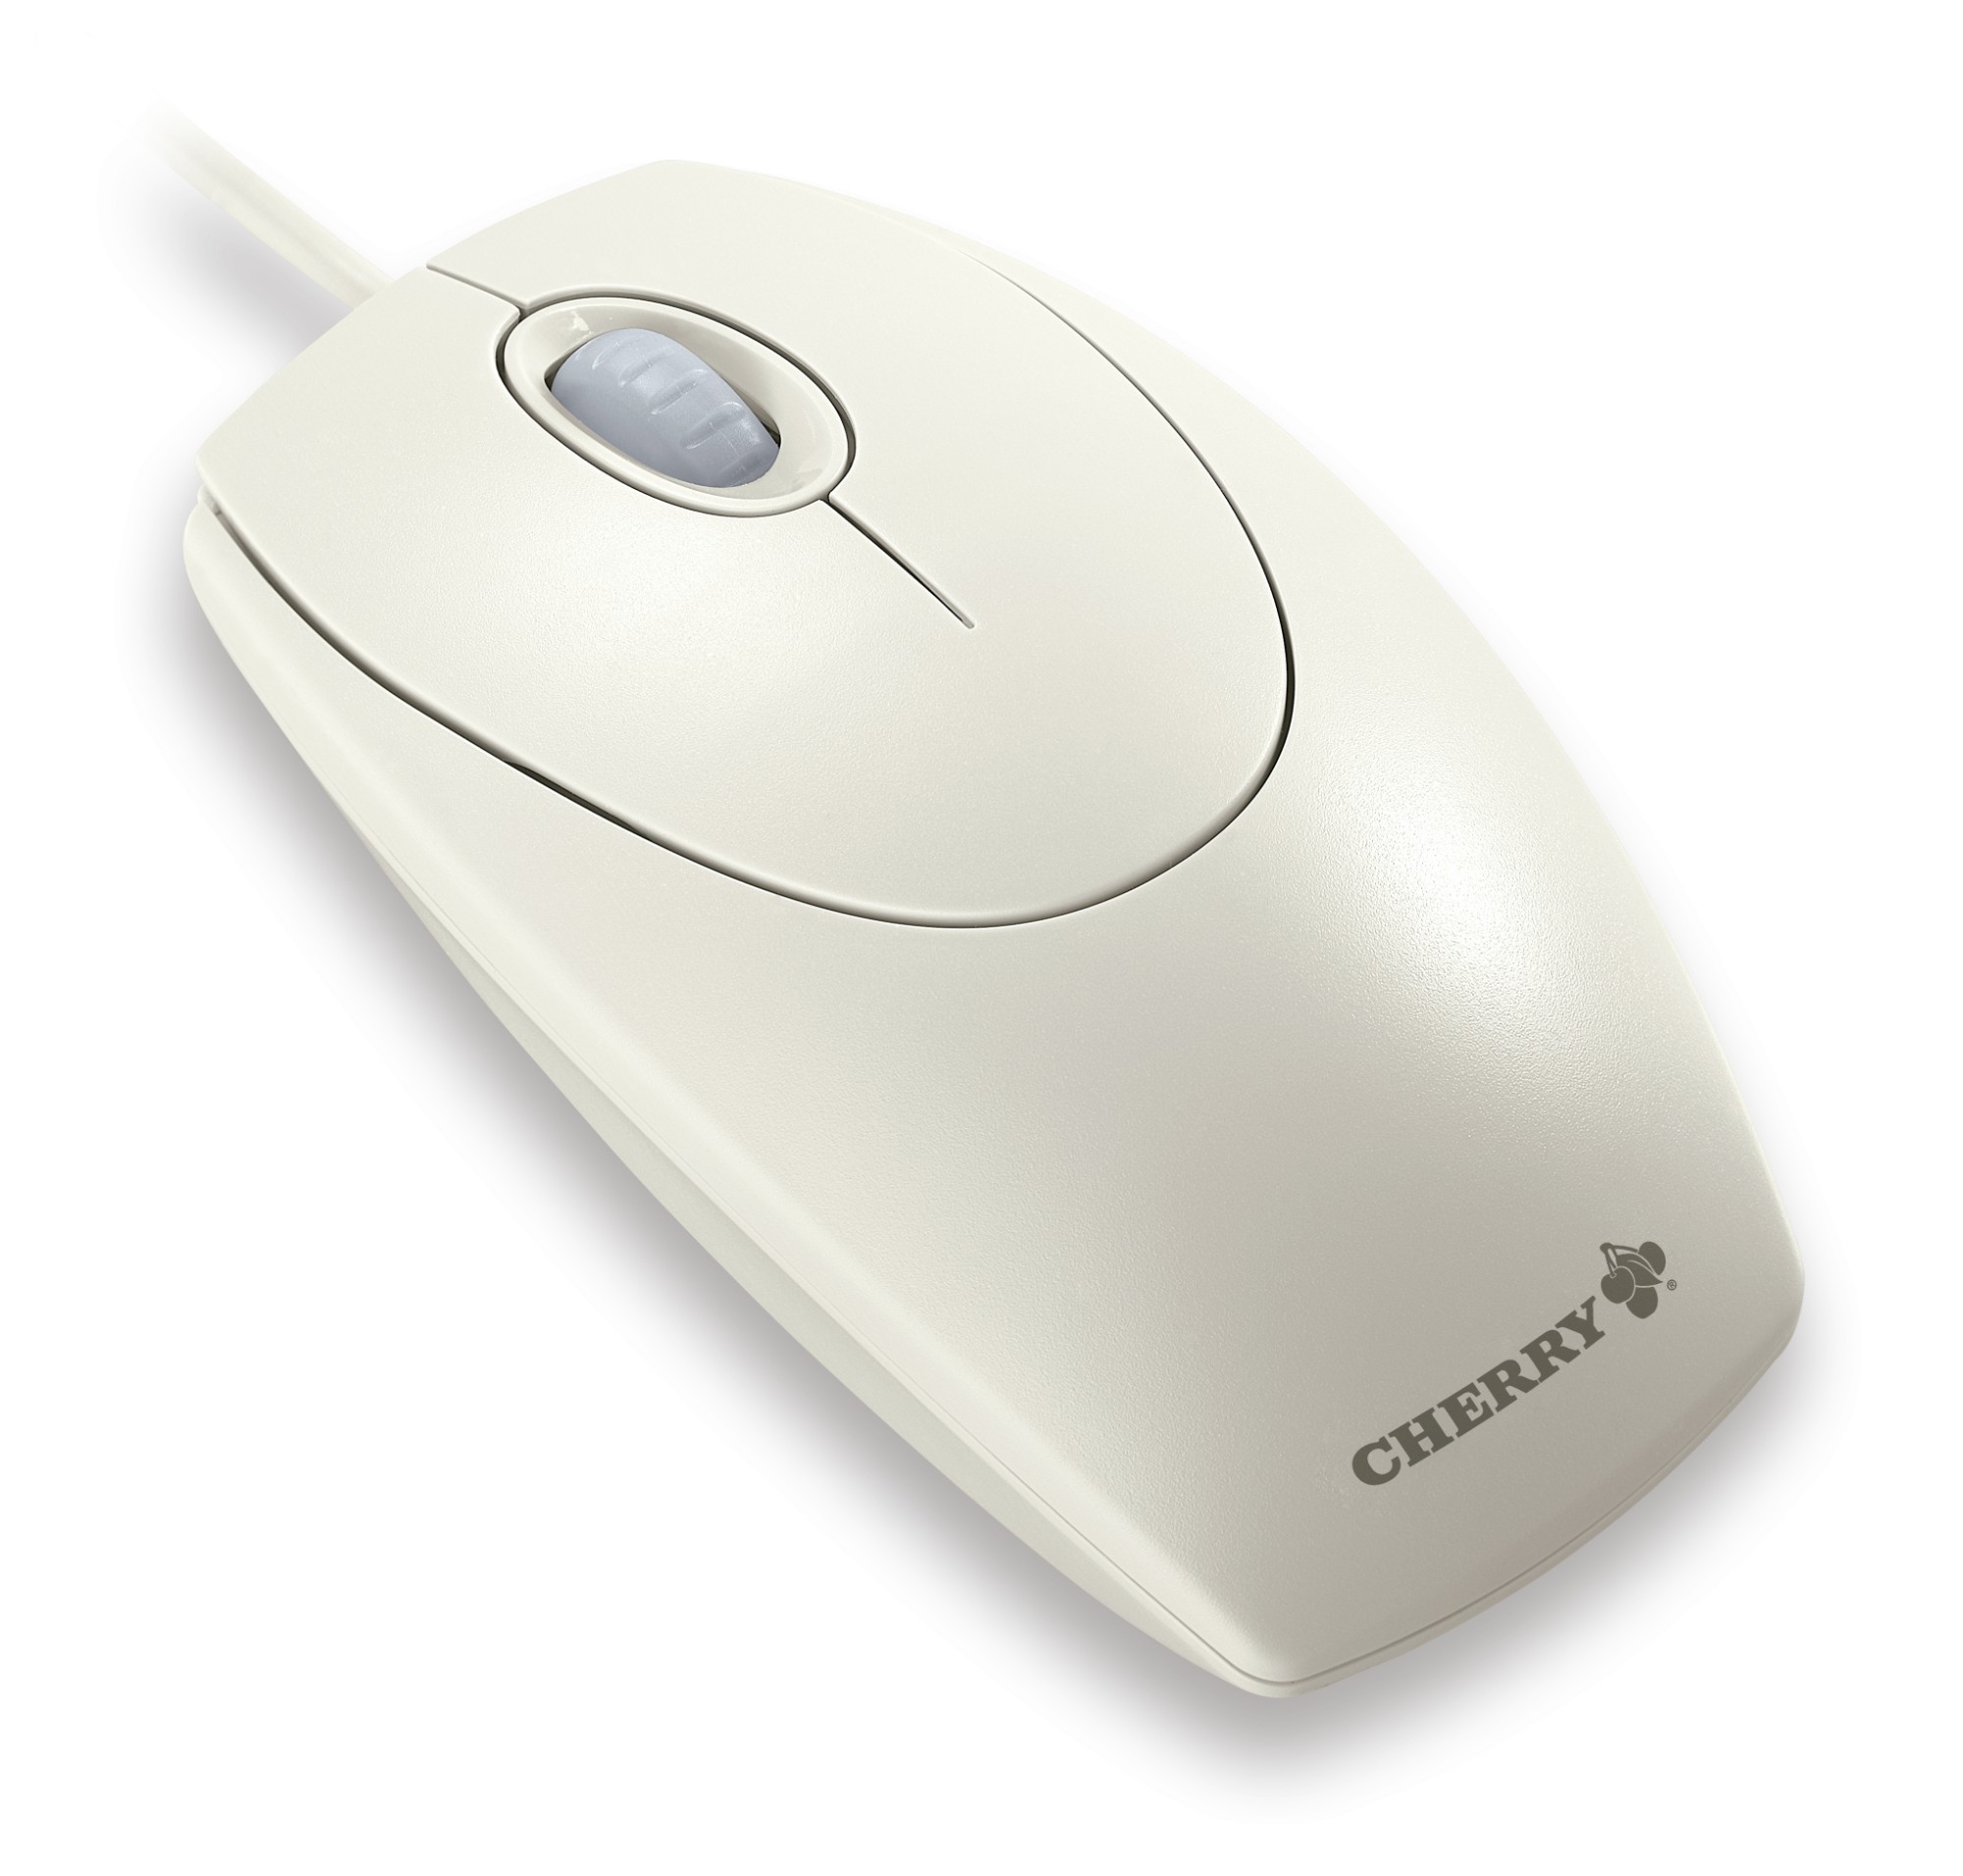 CHERRY WHEELMOUSE OPTICAL Corded Mouse, Light Grey, PS2/USB